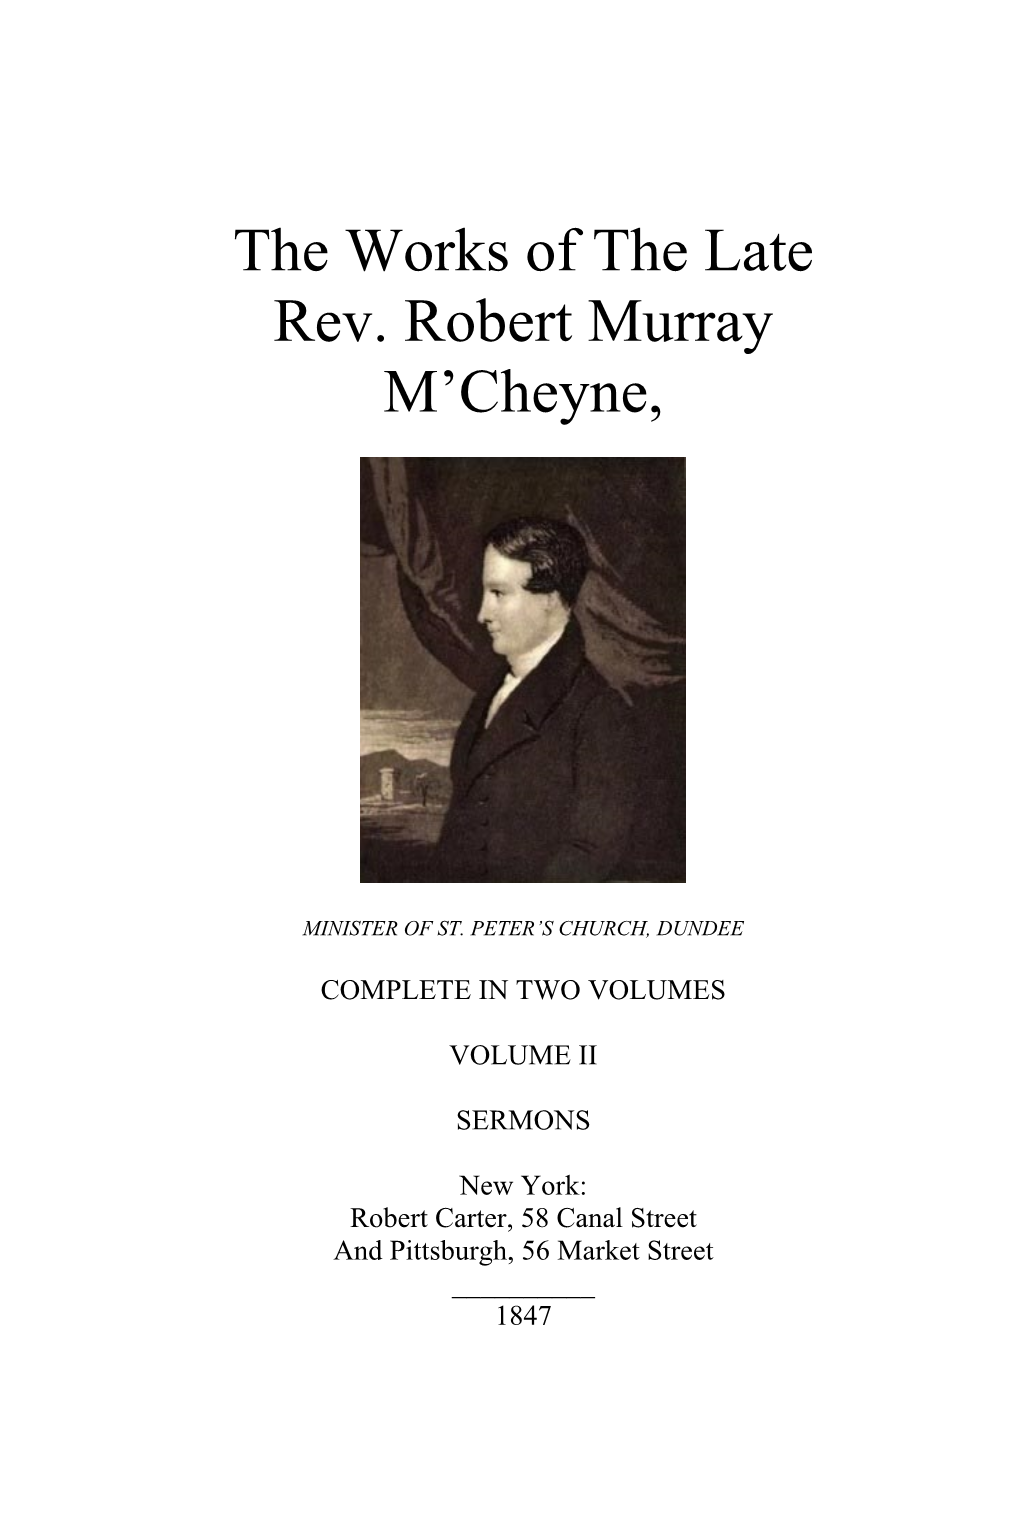 The Works of the Late Rev. Robert Murray M'cheyne